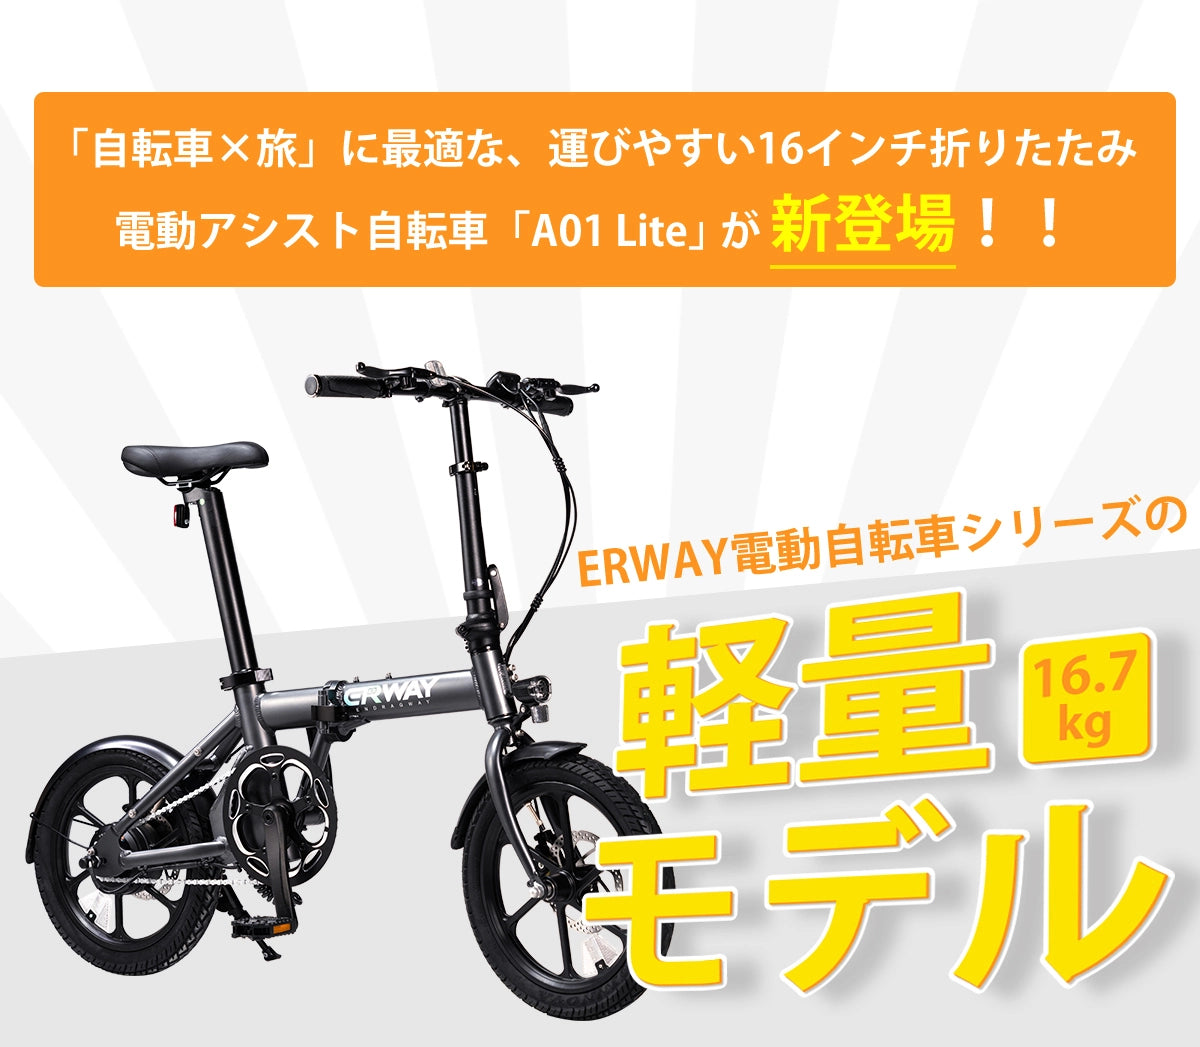 ERWAY軽量電動アシスト自転車 ERWAY A01Liteシリーズの軽量16.7 kgモデル